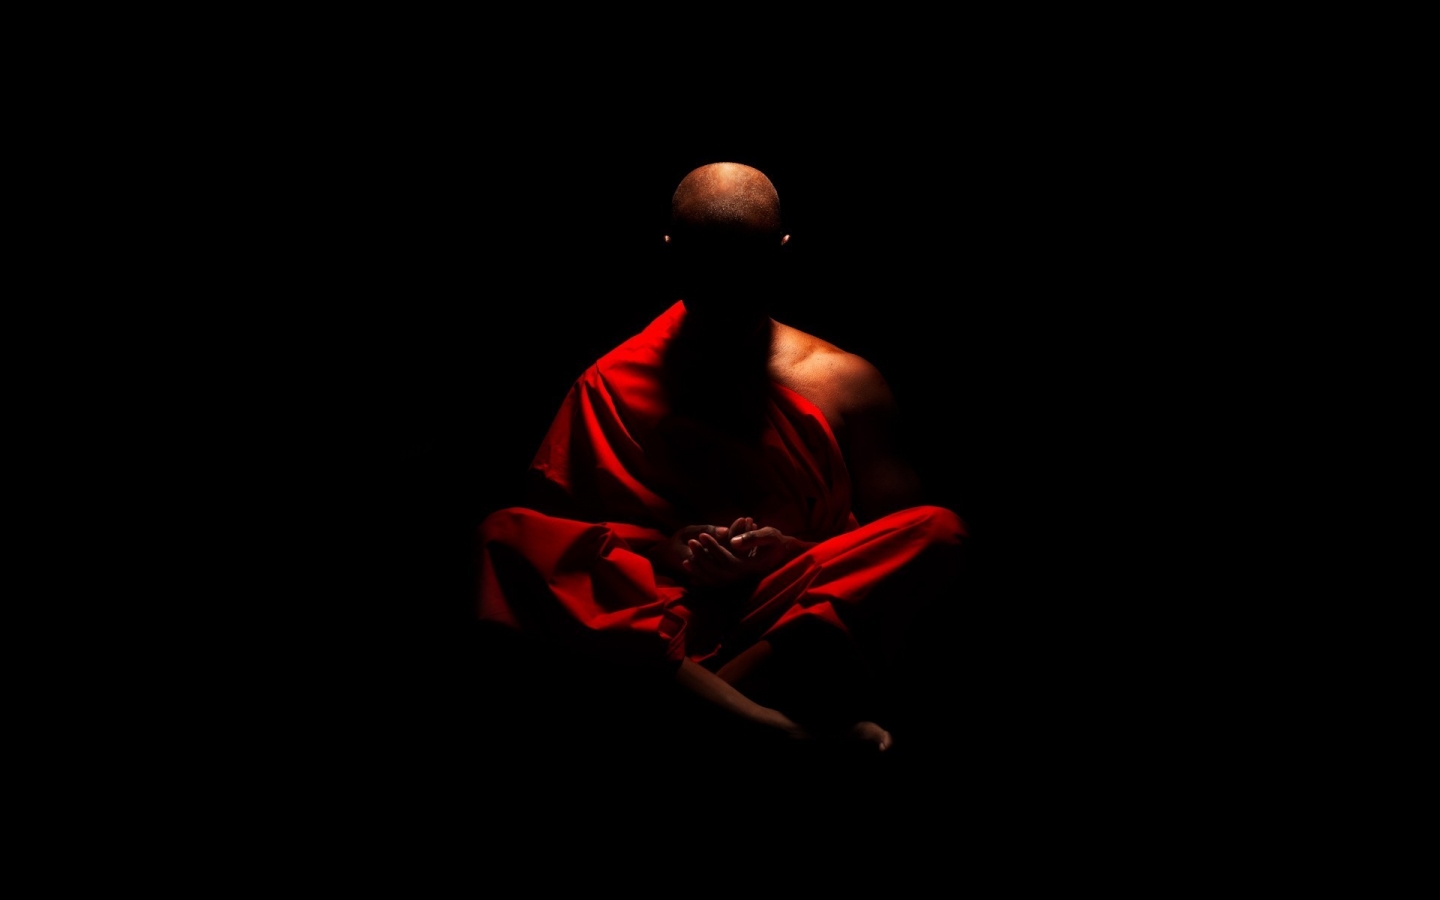 Shaolin Monk for 1440 x 900 widescreen resolution